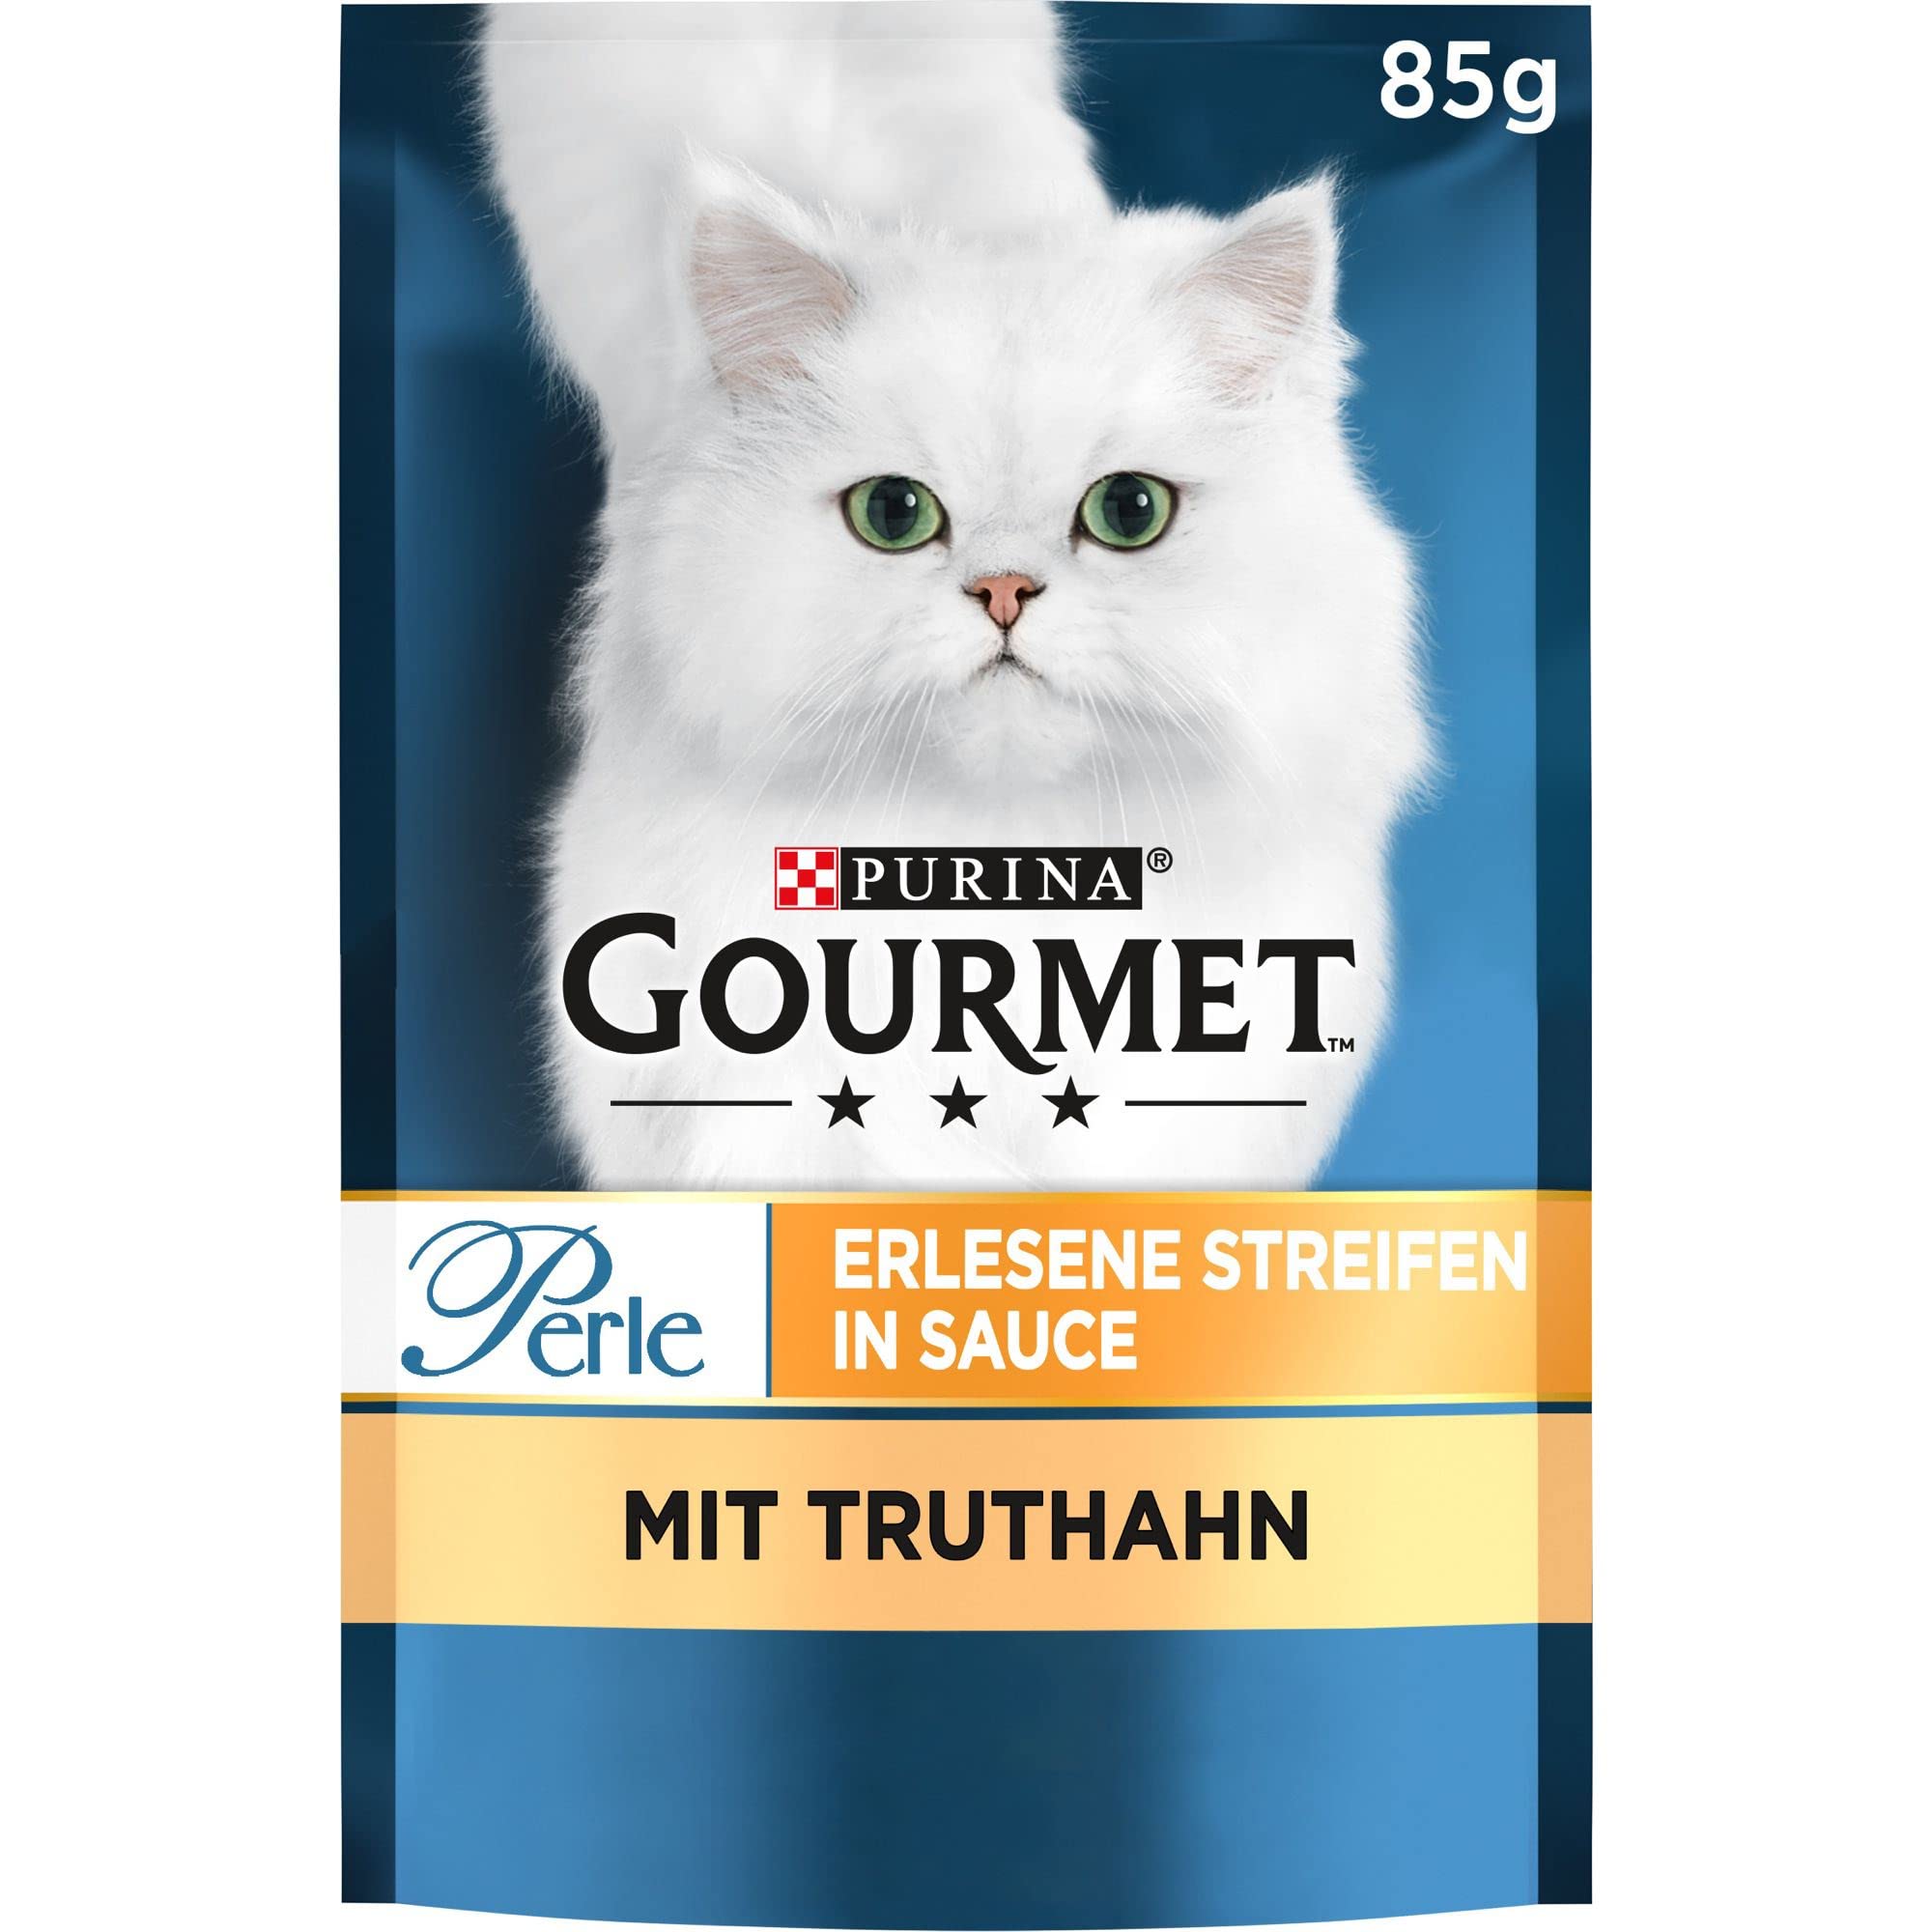 PURINA GOURMET Perle Erlesene Streifen Katzenfutter nass, mit Truthahn, 24er Pack (24 x 85g)